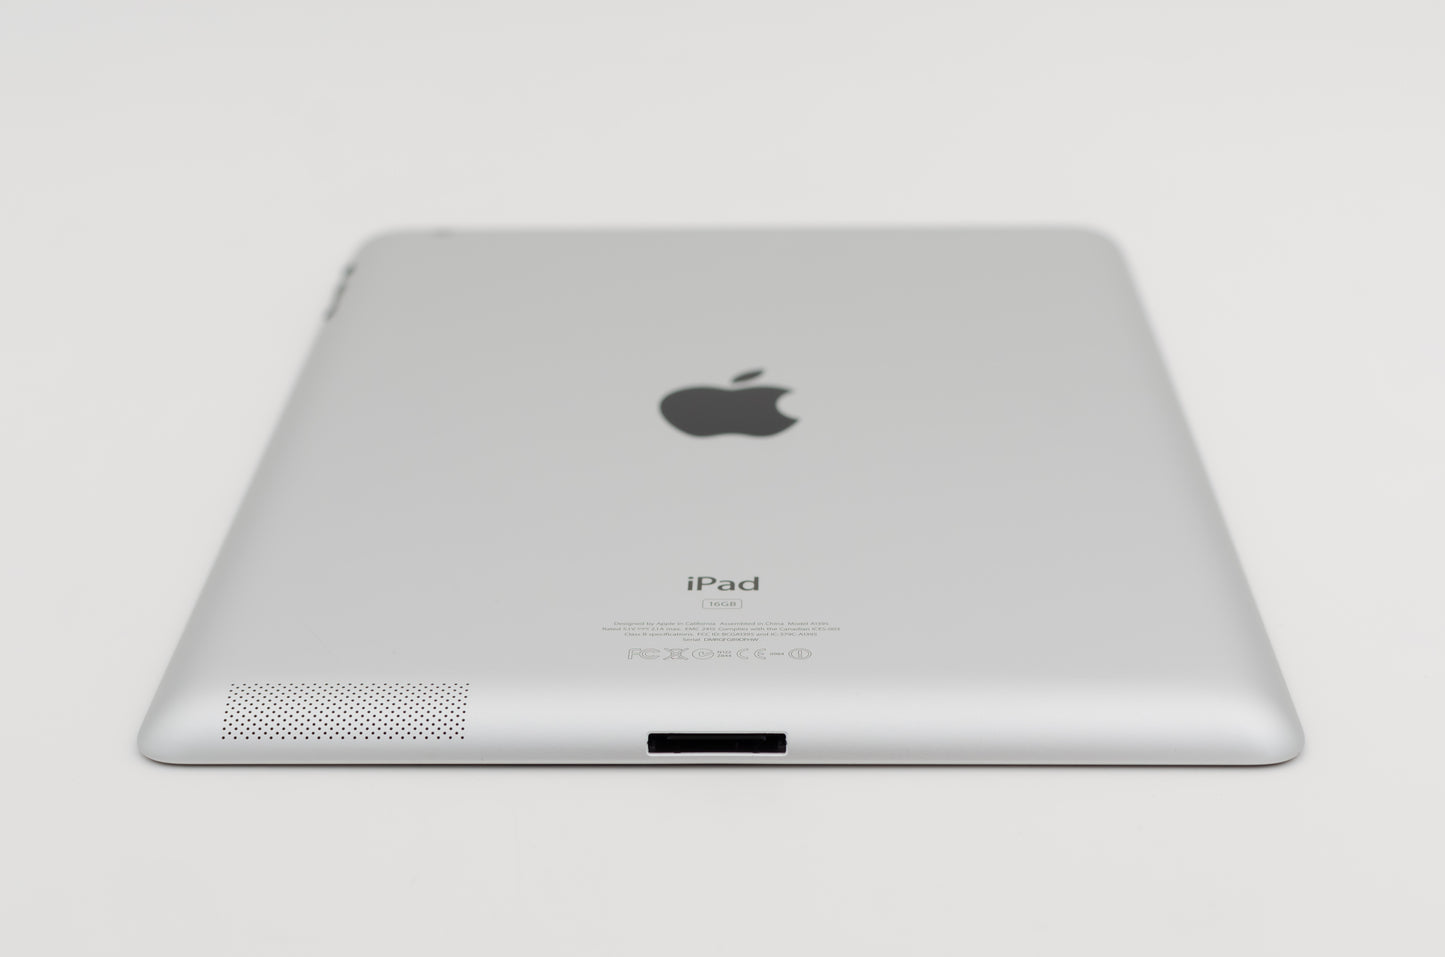 apple-2012-9.7-inch-ipad-2-a1395-silver/white-4